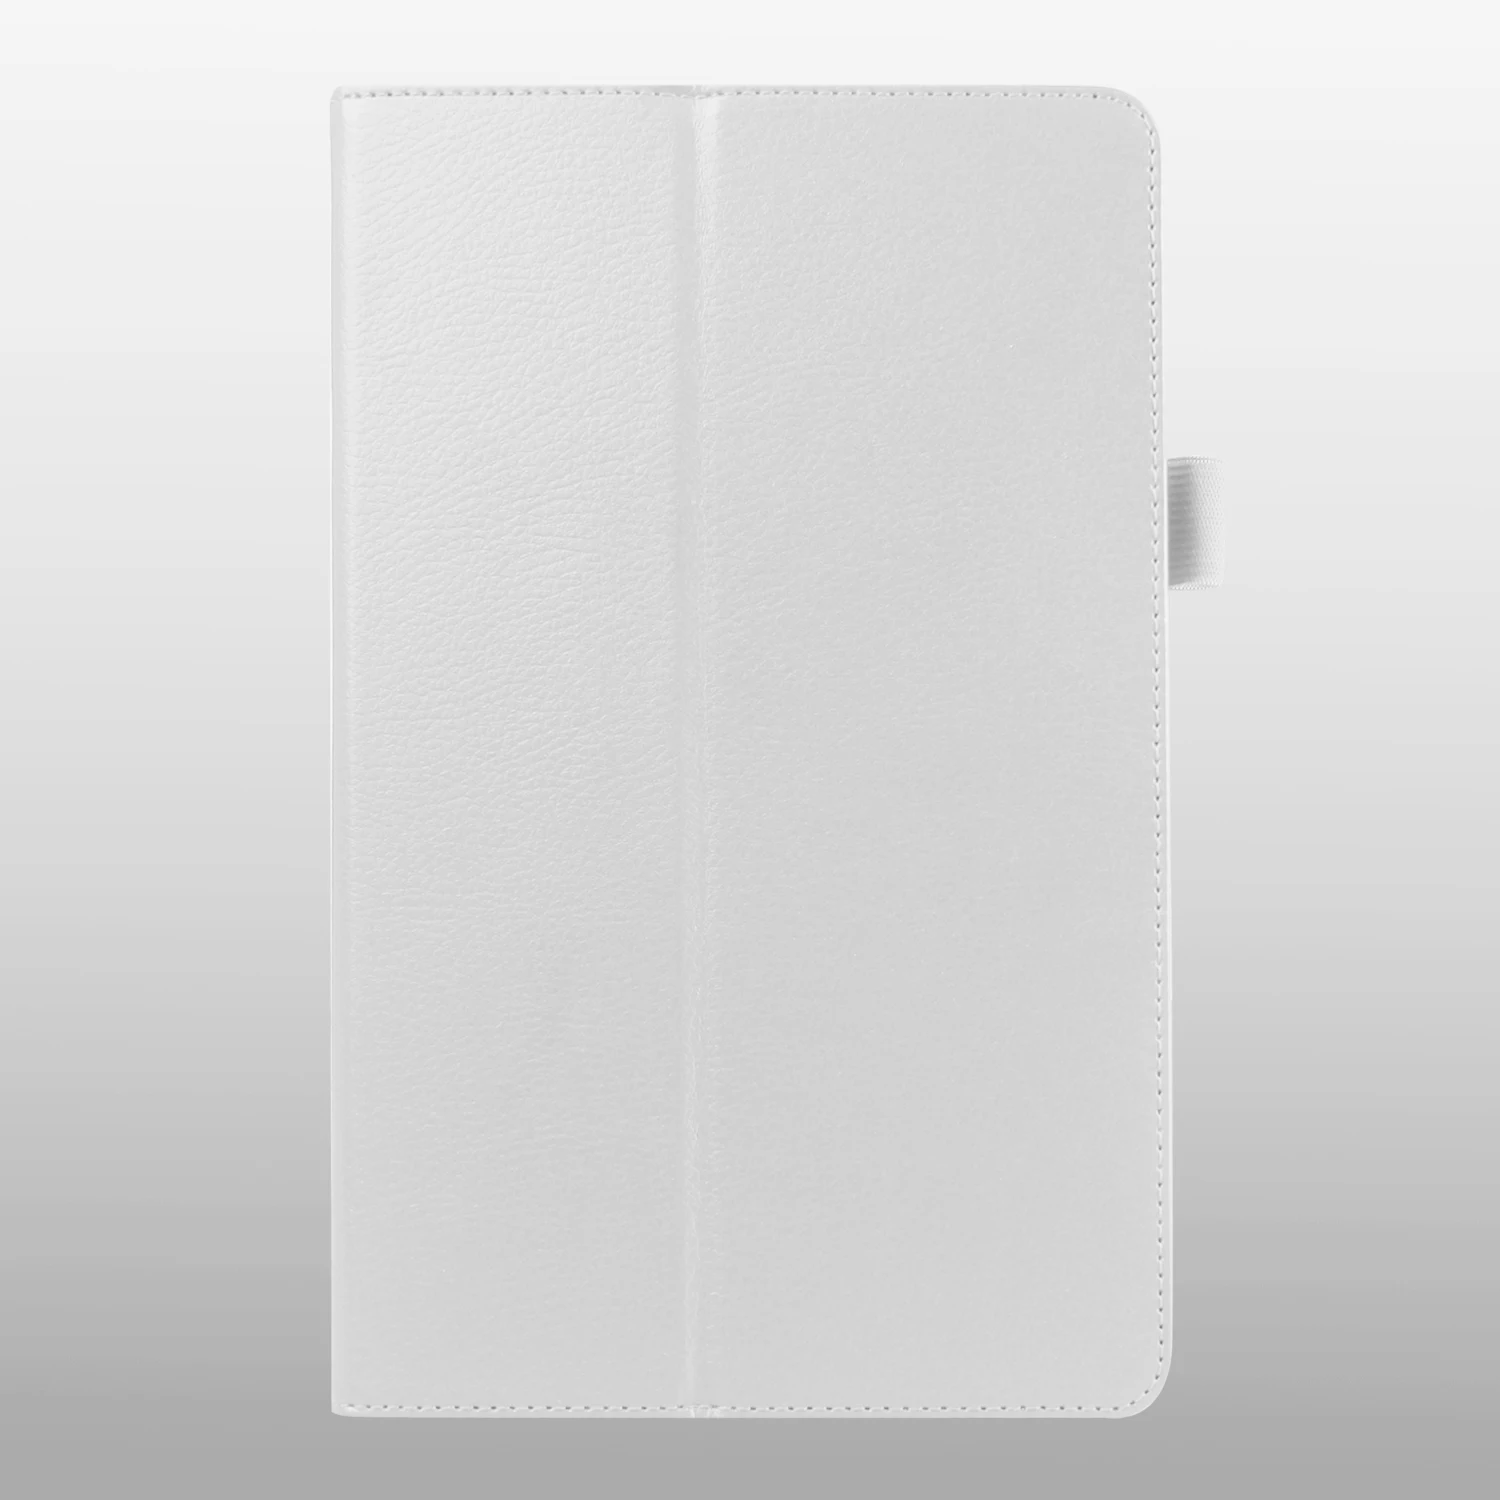 Folio PU кожаный чехол для samsung Galaxy Tab E 9,6 дюймов планшет Магнитный чехол для samsung SM-T560 SM-T561 стенд Fundas Capa - Цвет: Белый